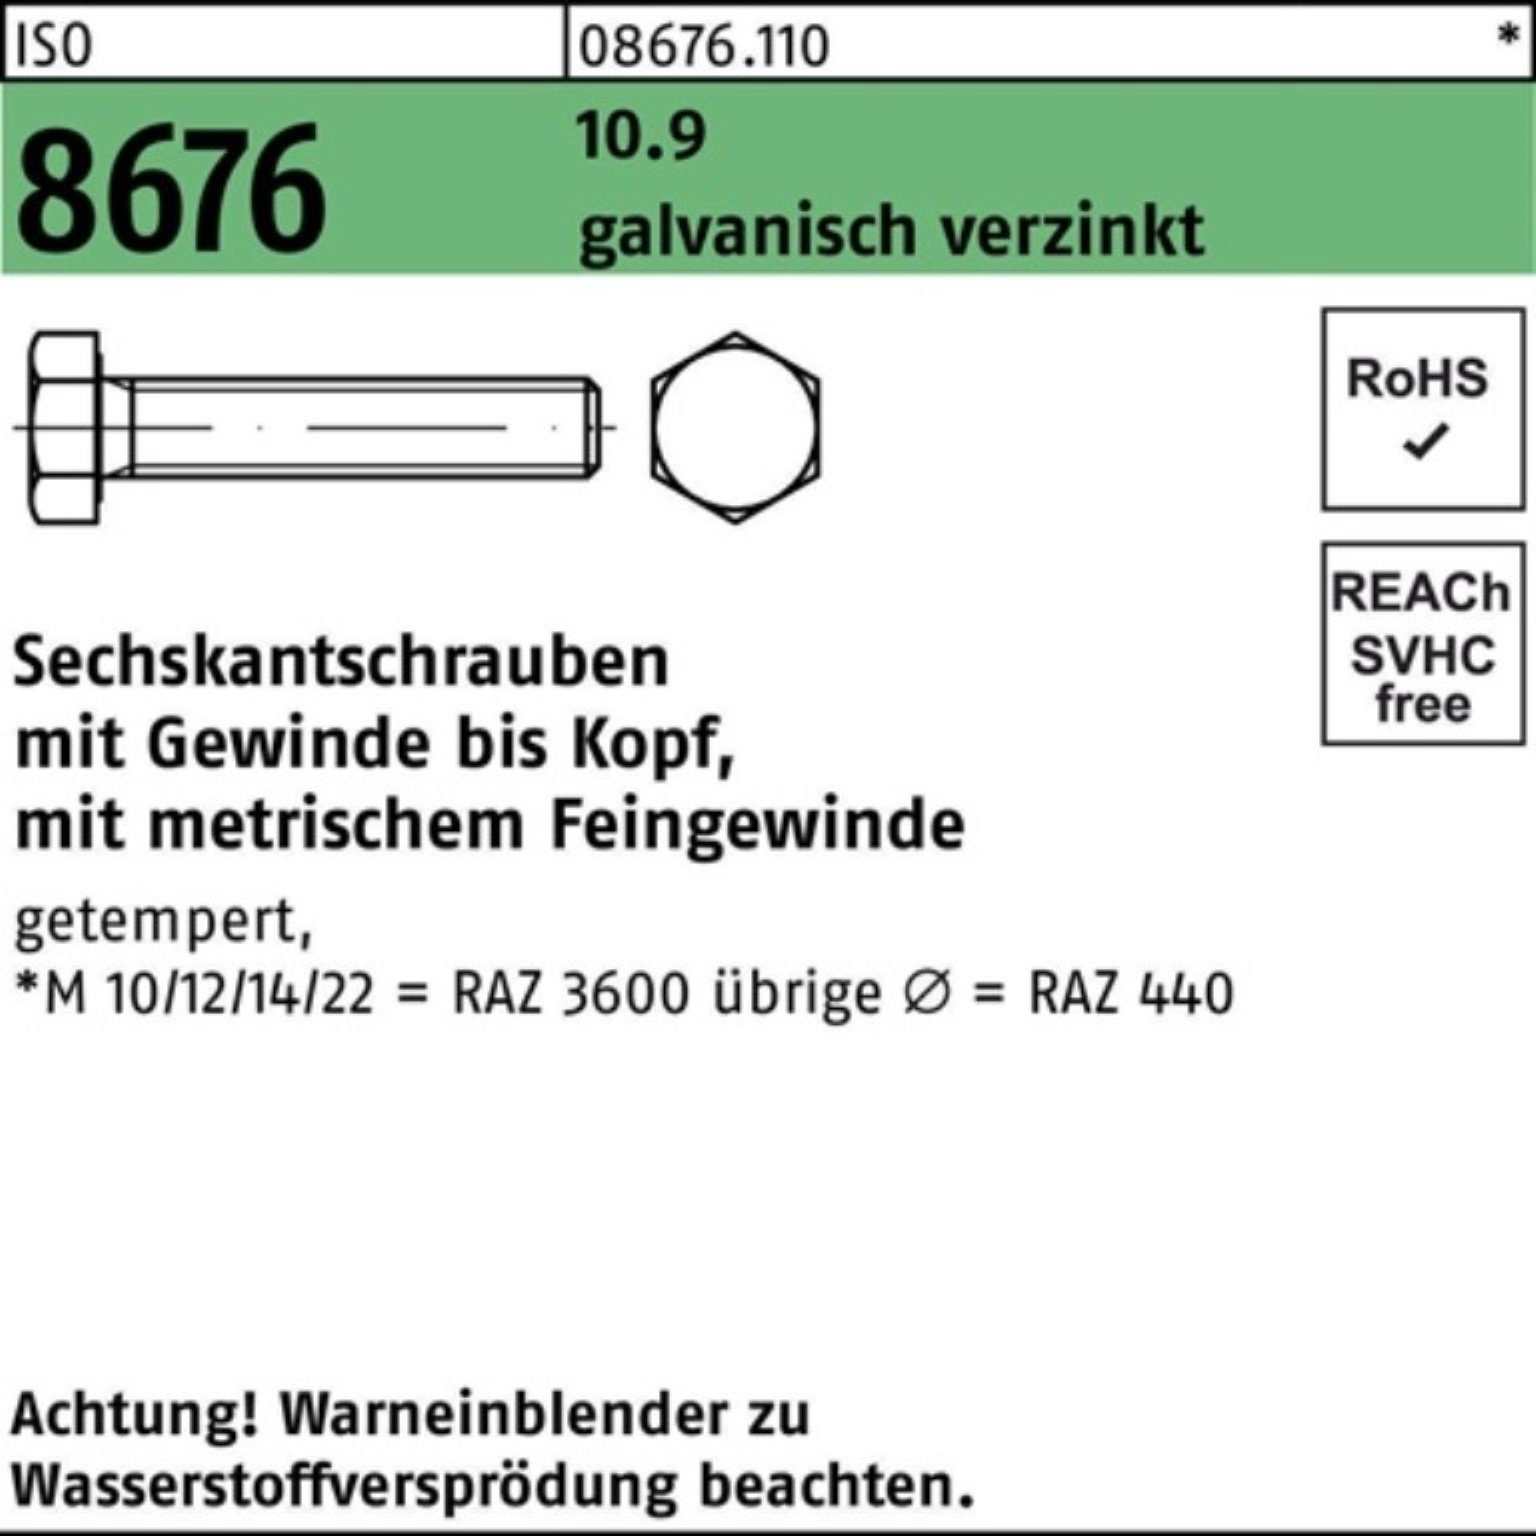 Reyher Sechskantschraube 100er Pack Sechskantschraube M12x1,5x 8676 1 10.9 ISO galv.verz. VG 35